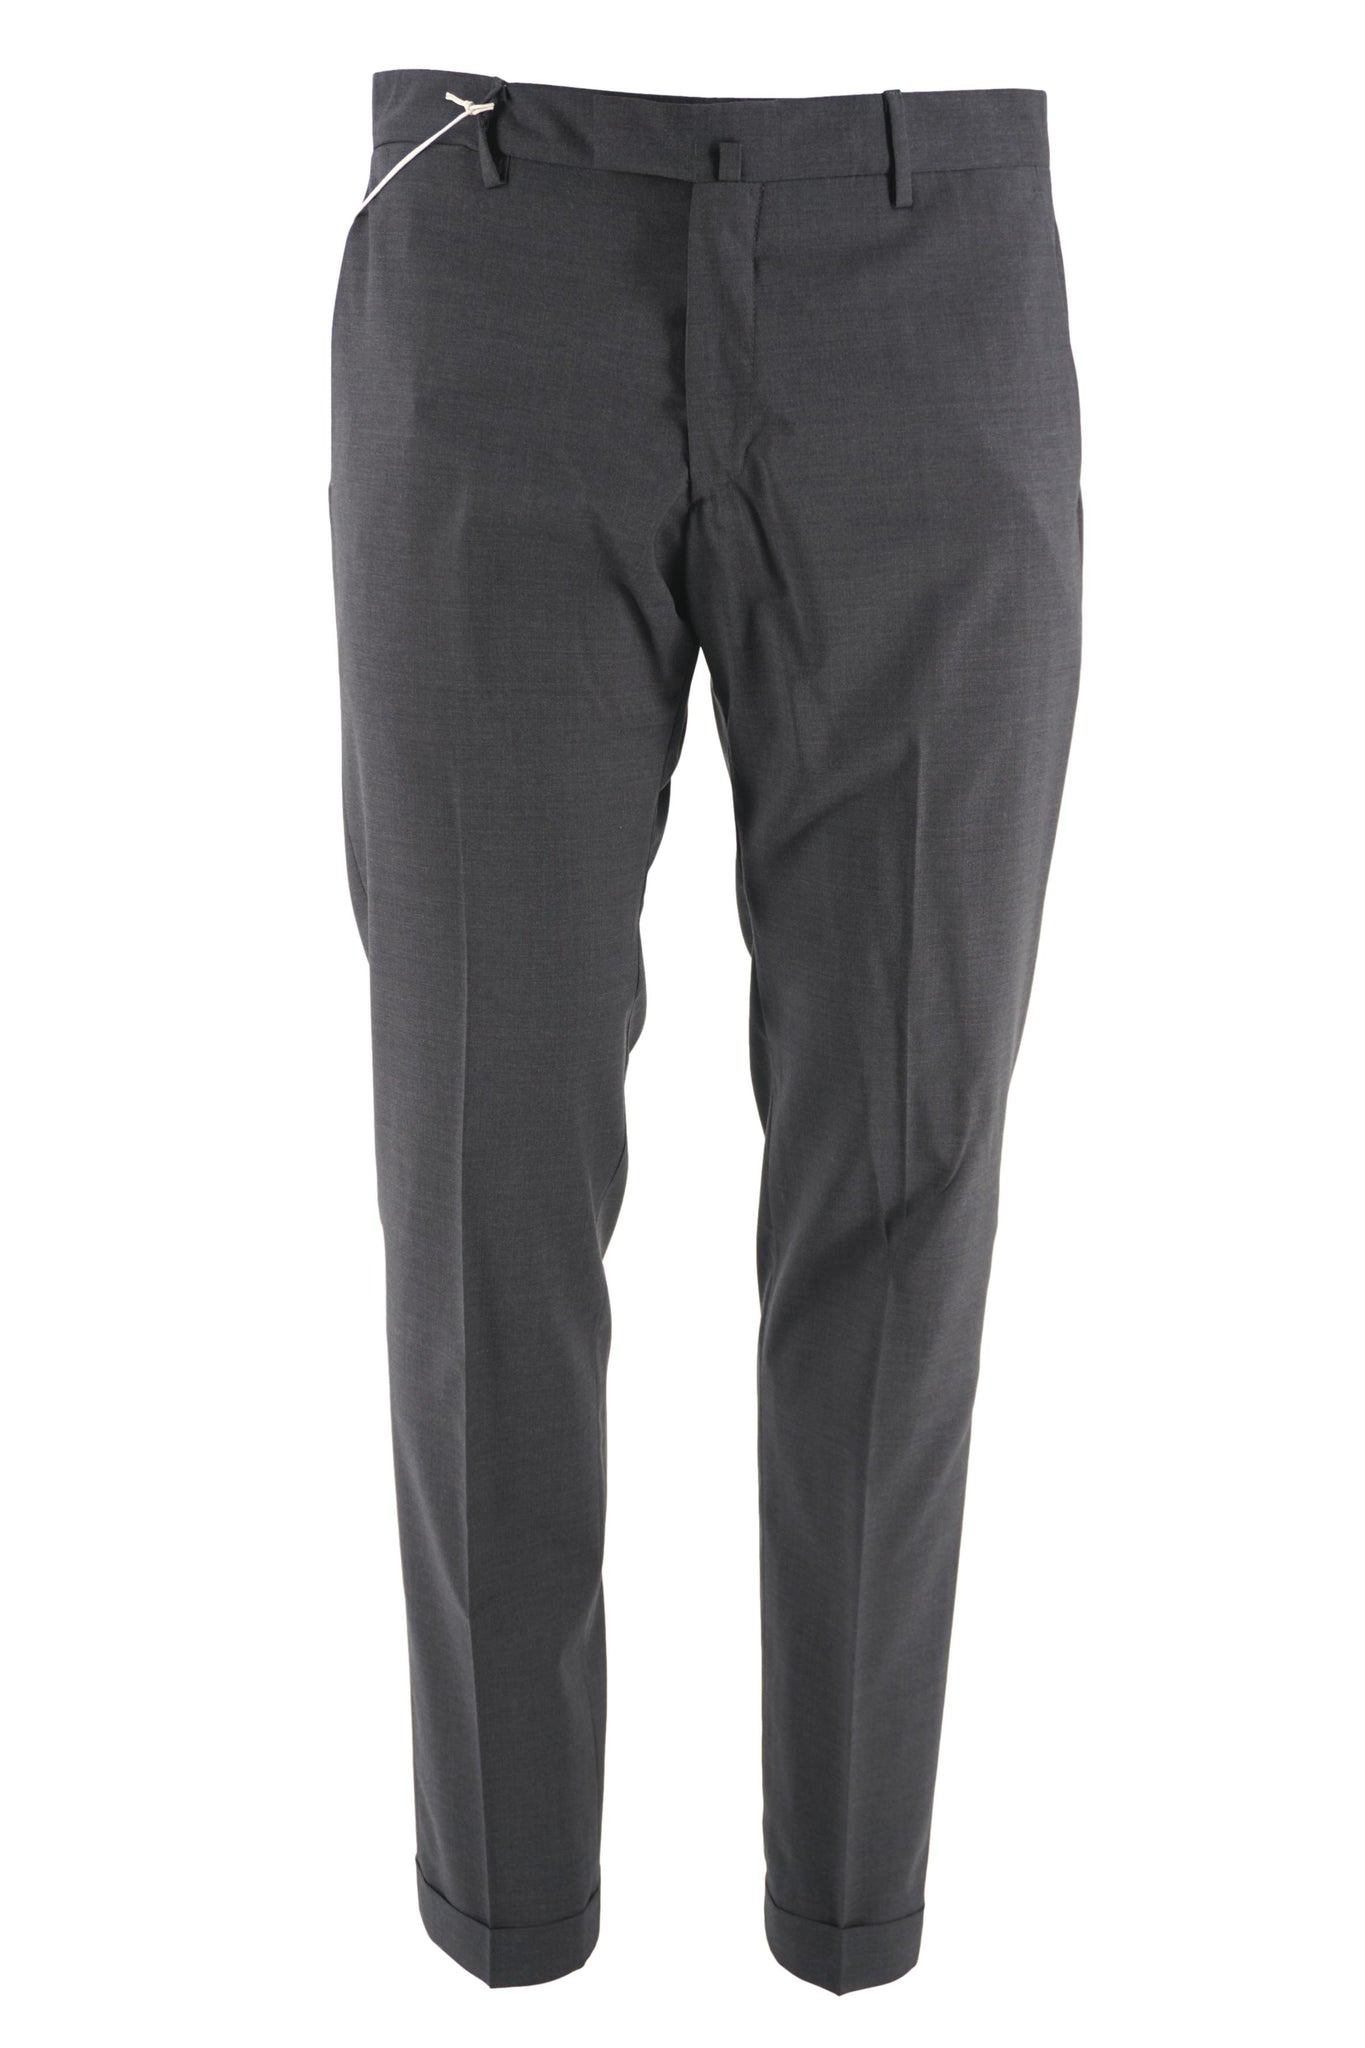 Pantalone Sartoriale in Lana Estiva / Grigio - Ideal Moda